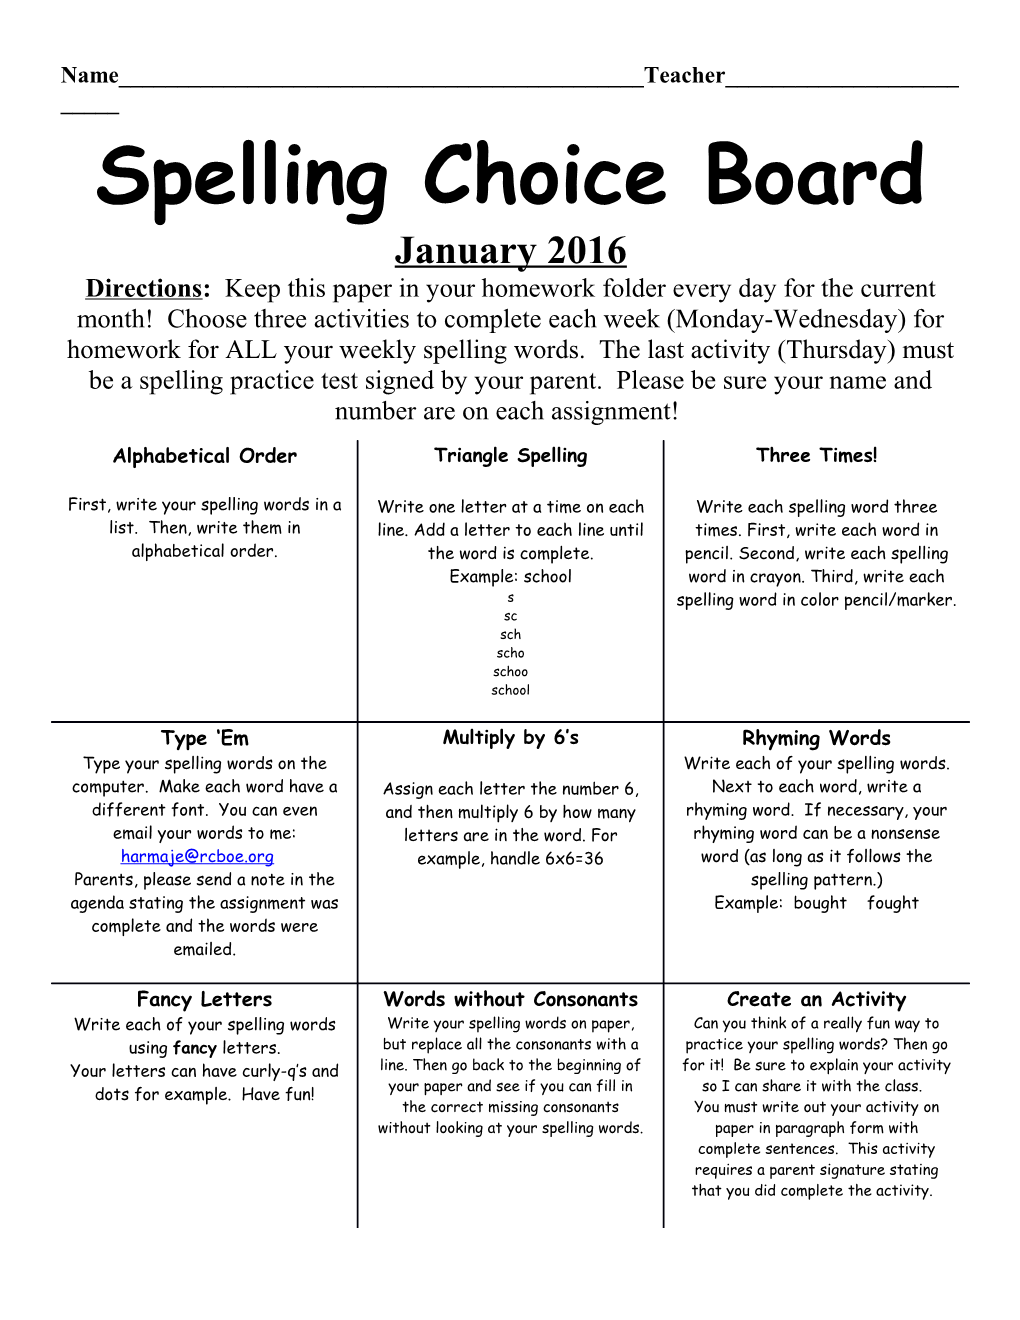 Spelling Choice Board s1